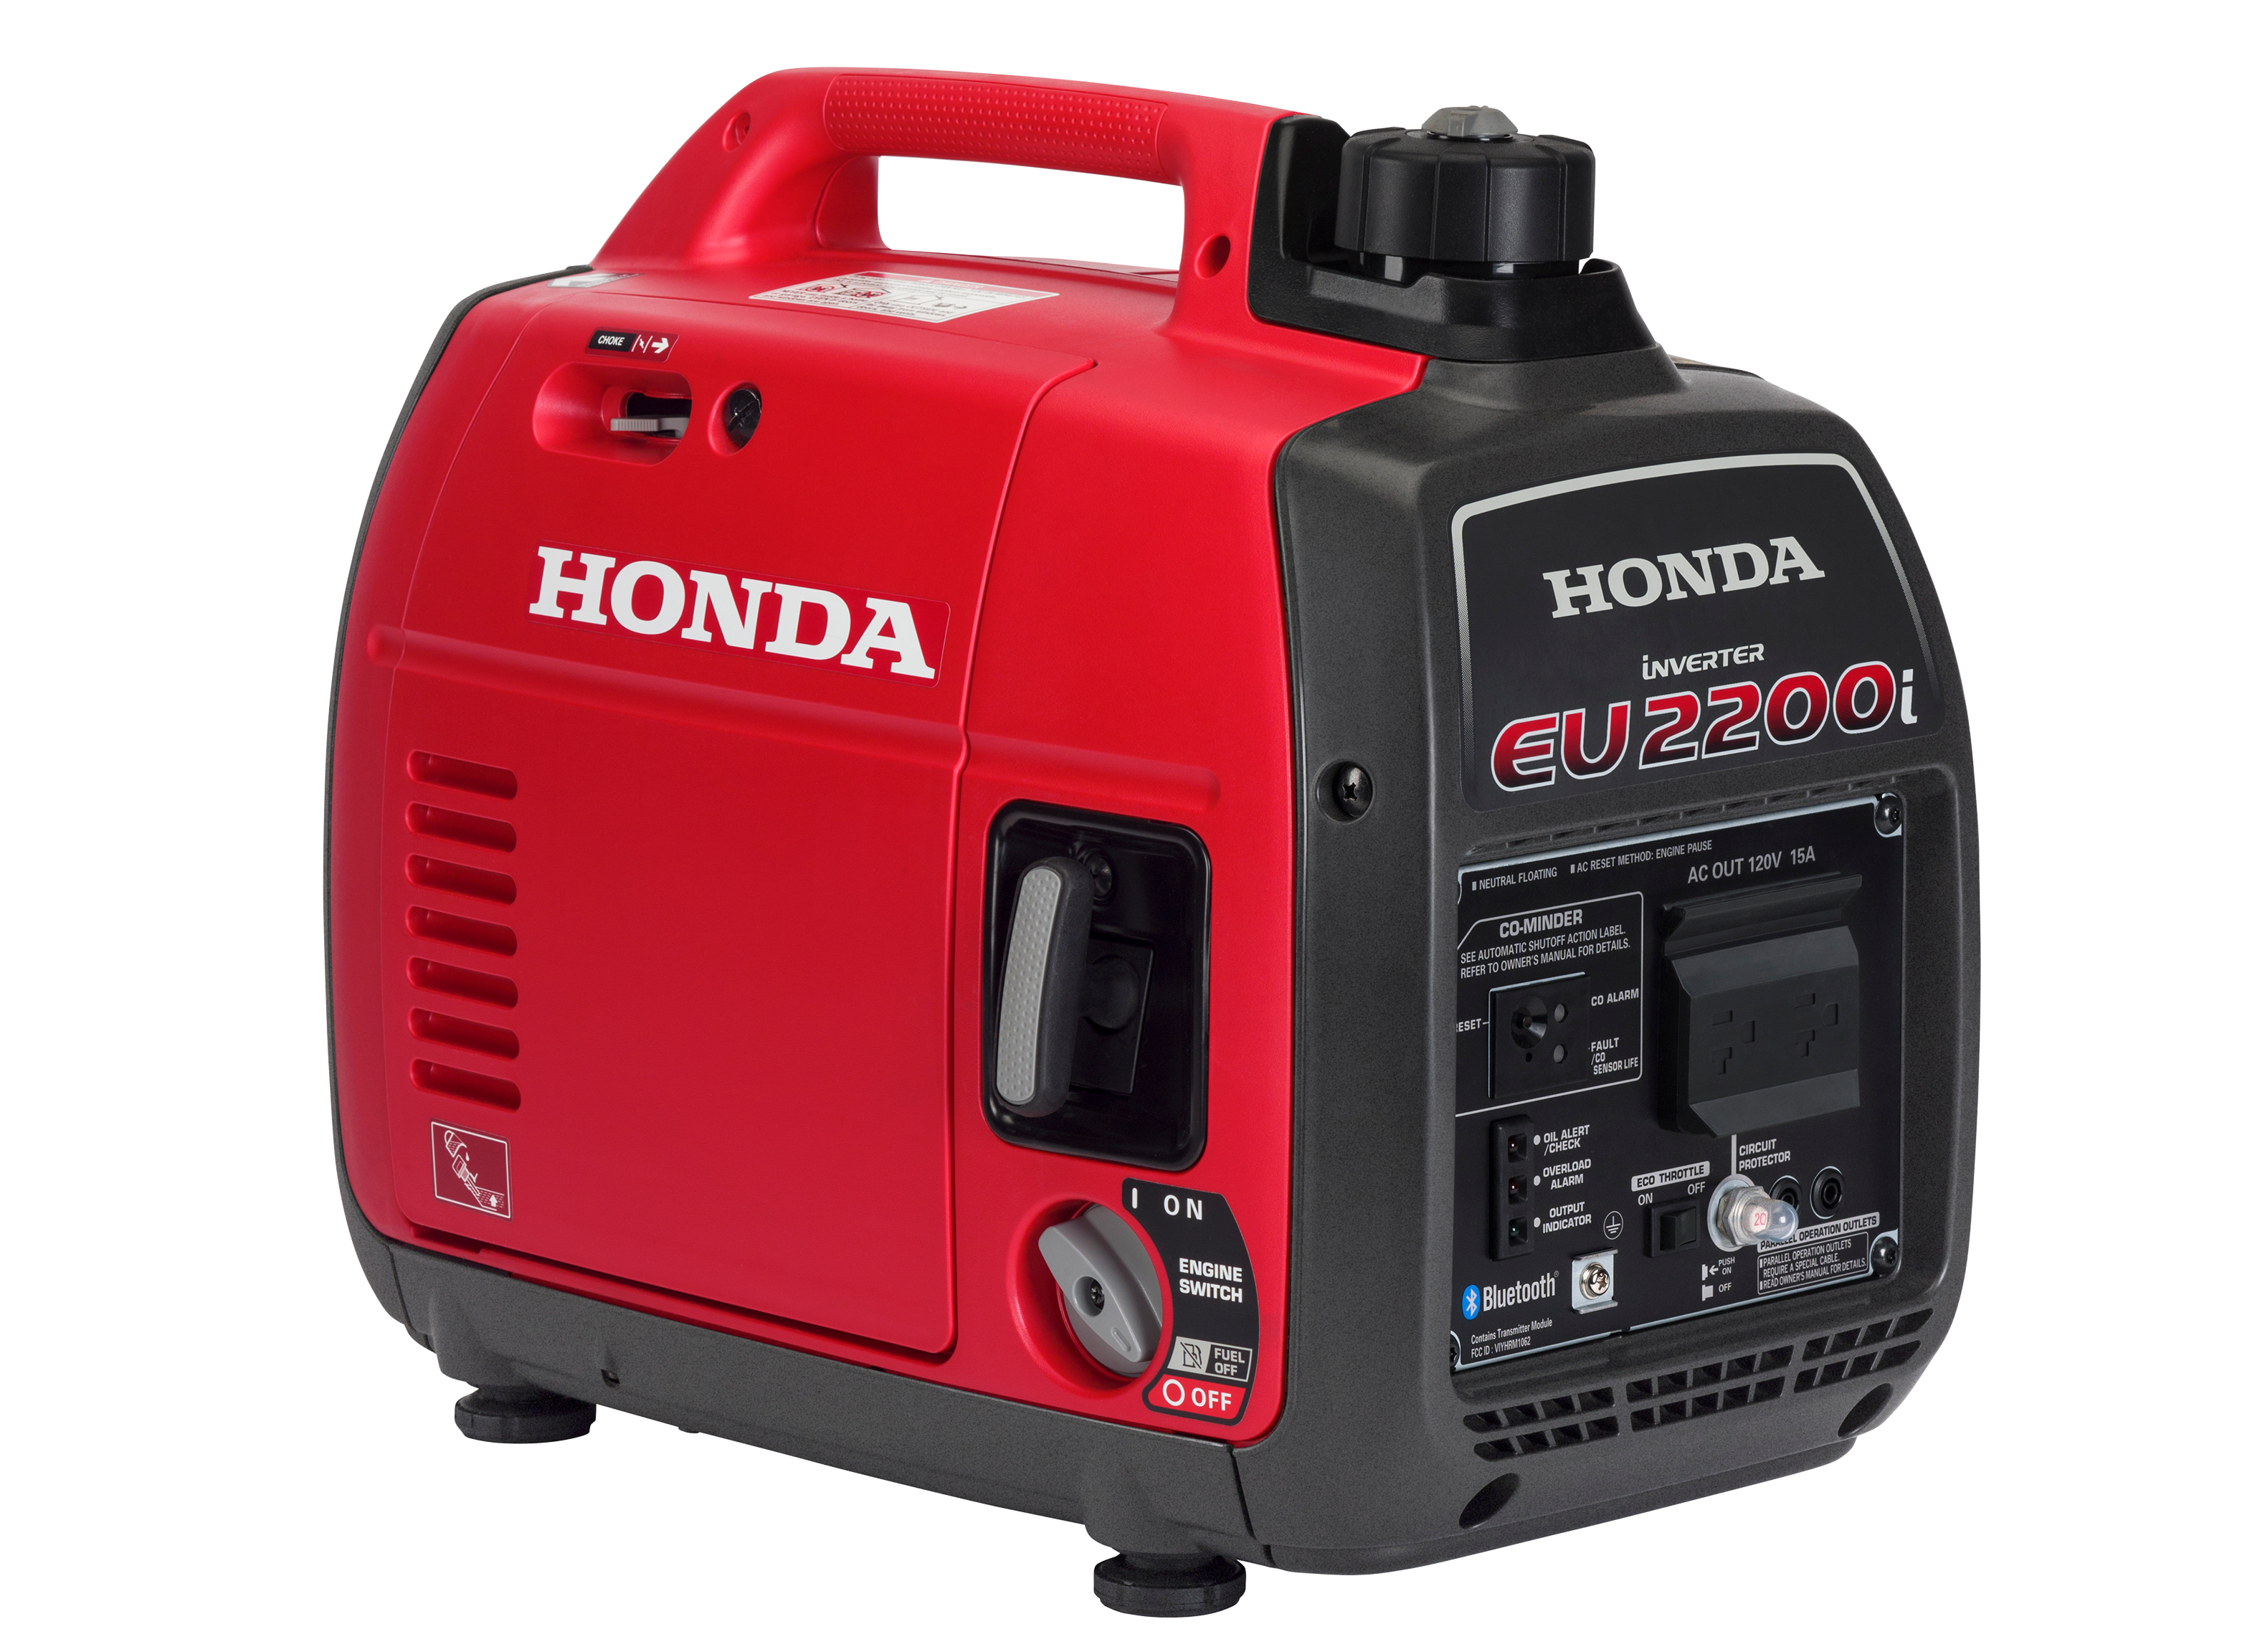 Price And Availability Of Honda 2500 Generator